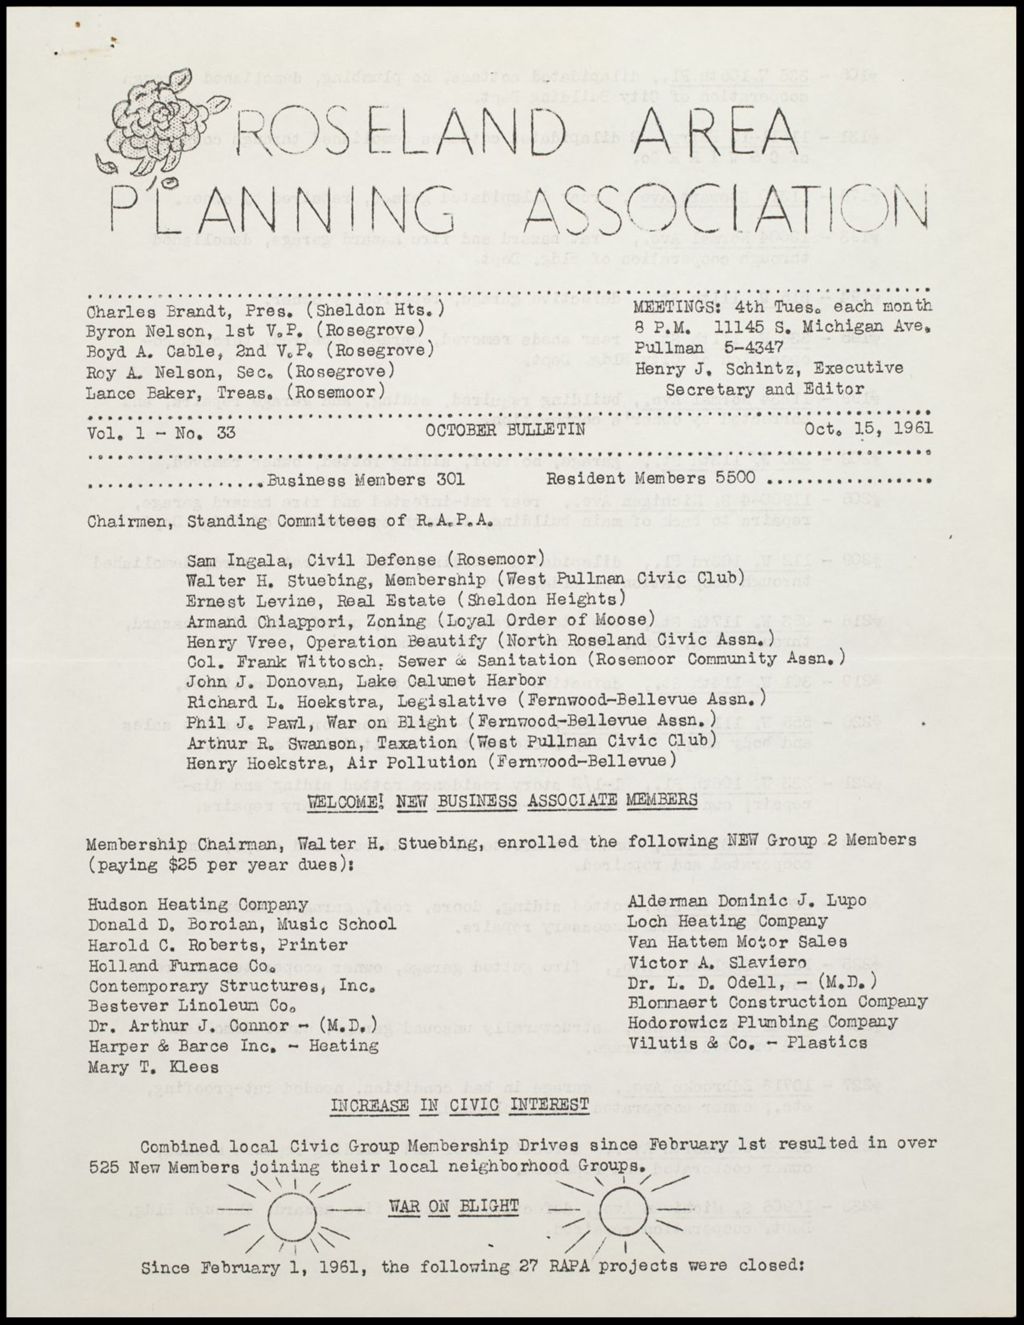 Roseland Area Planning Association (Folder 182)